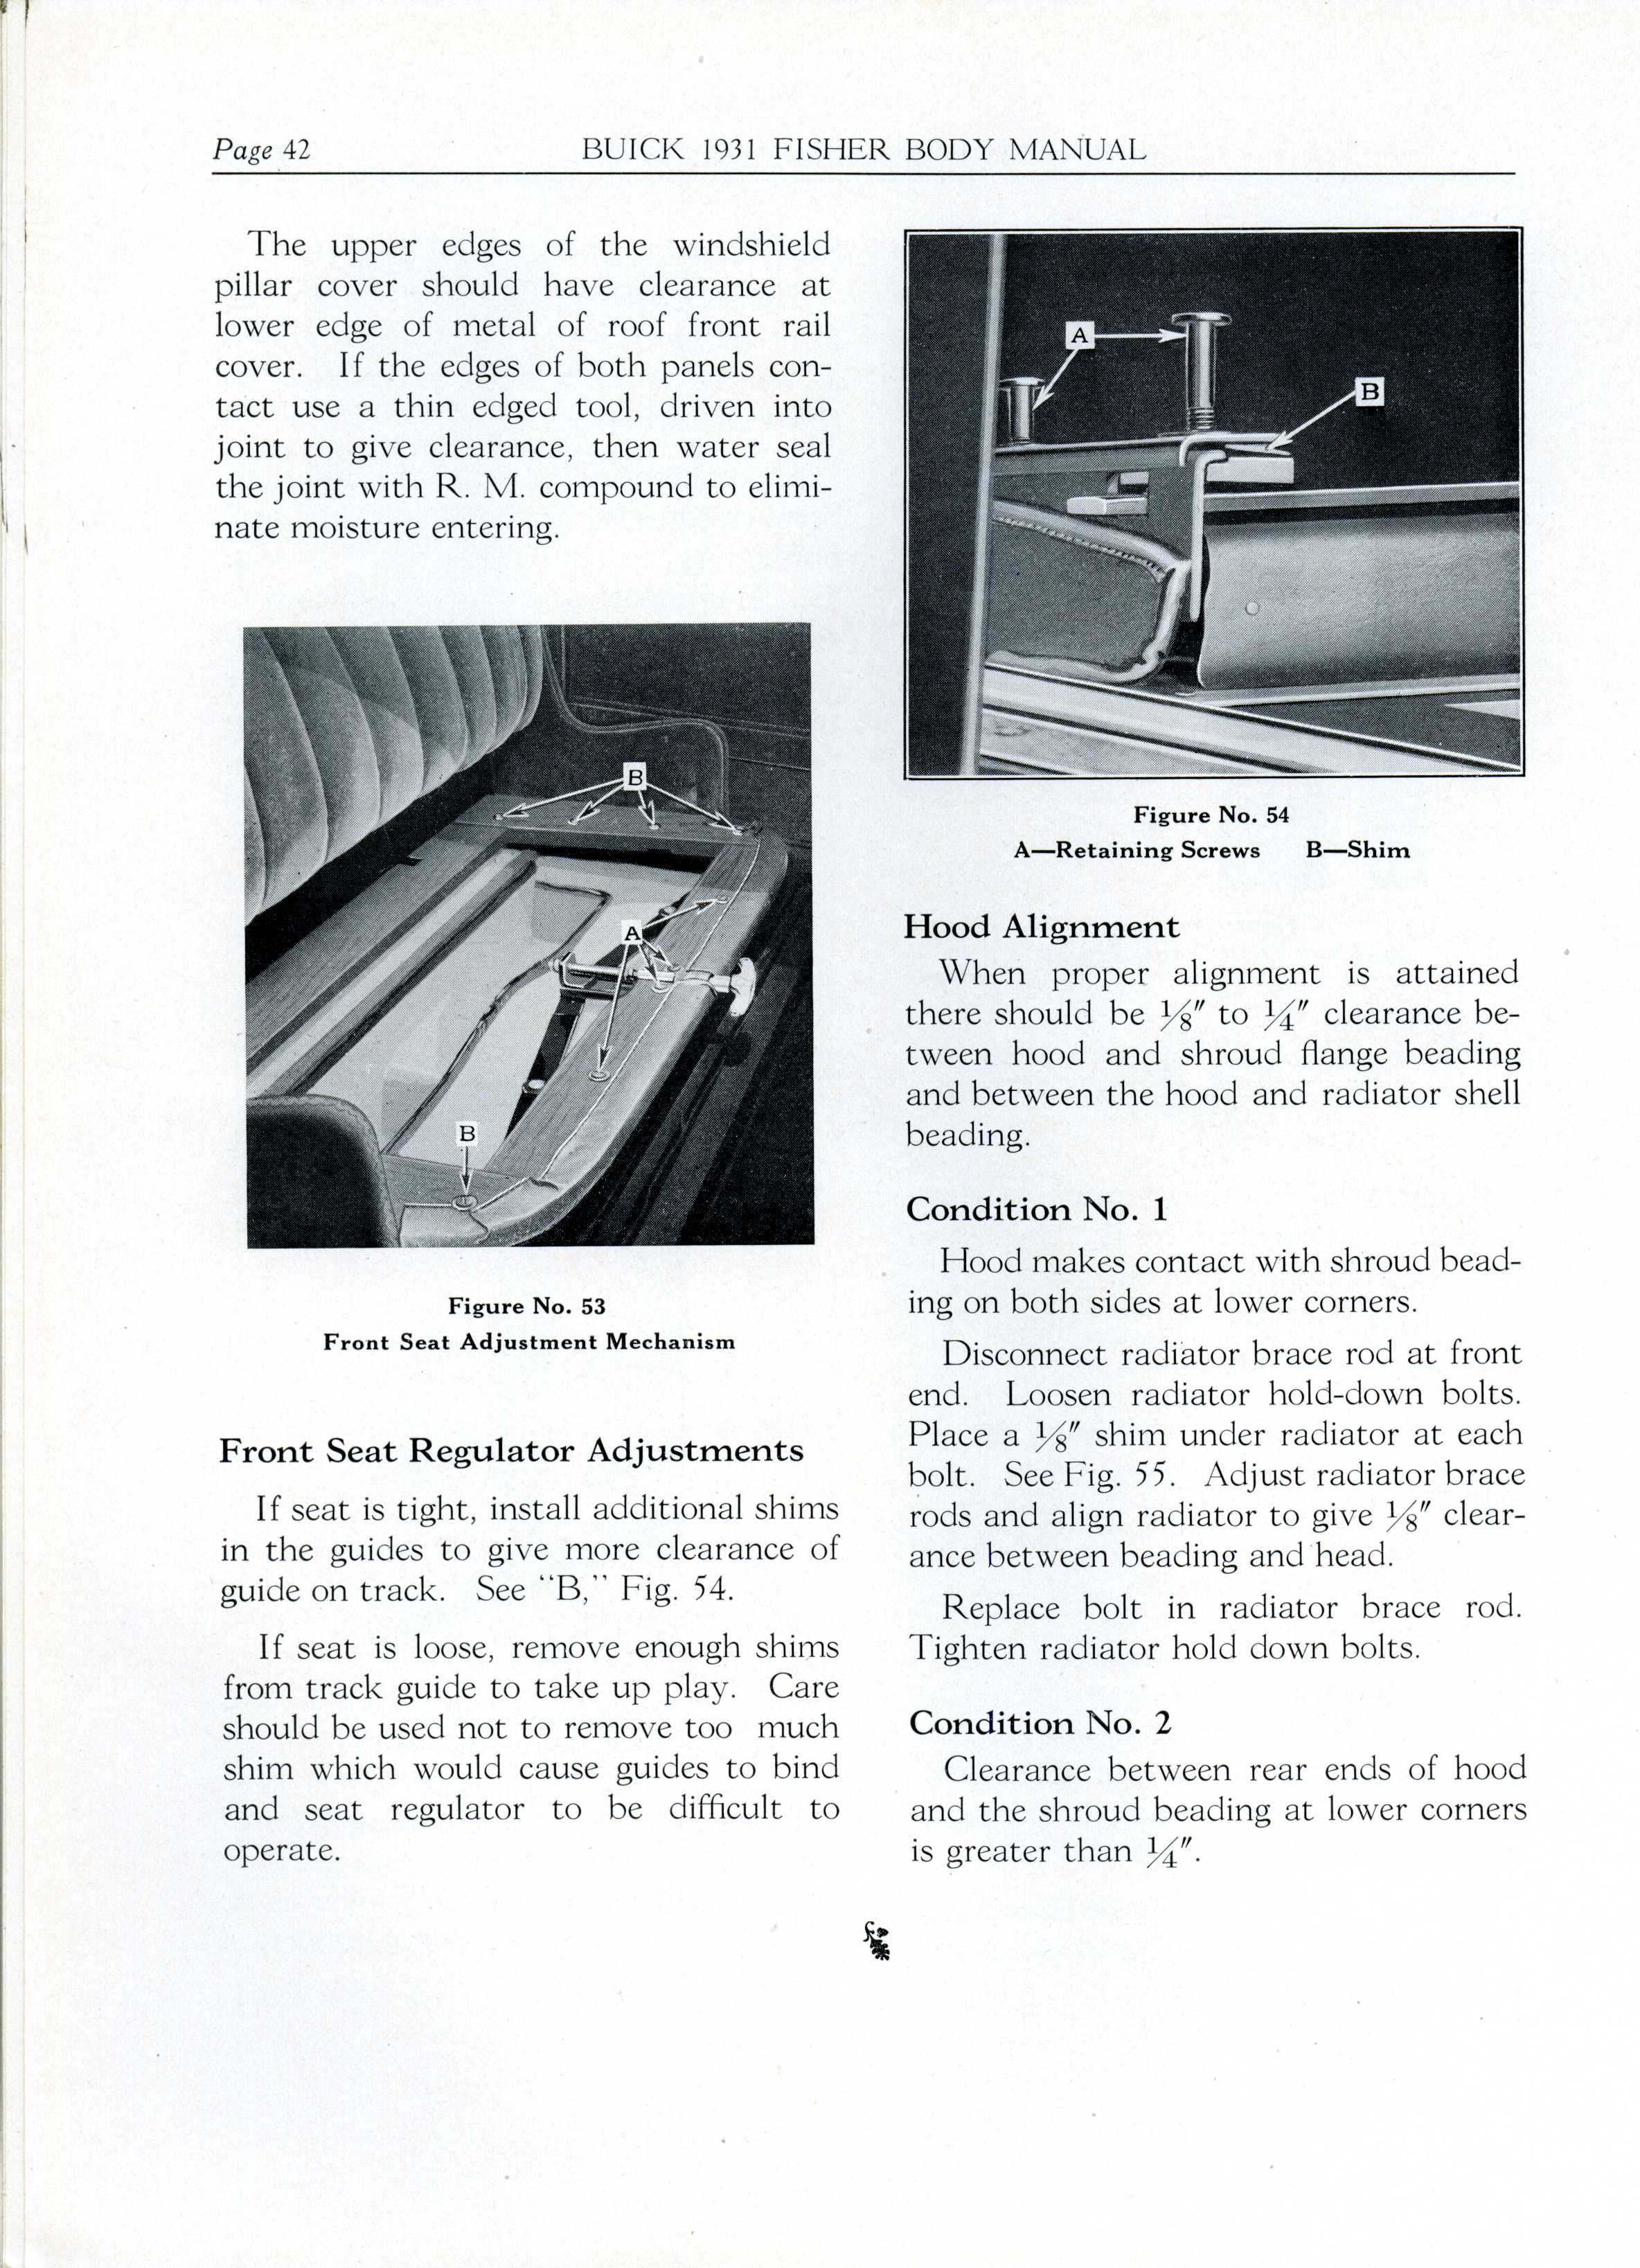 1931 Buick Fisher Body Manual-42